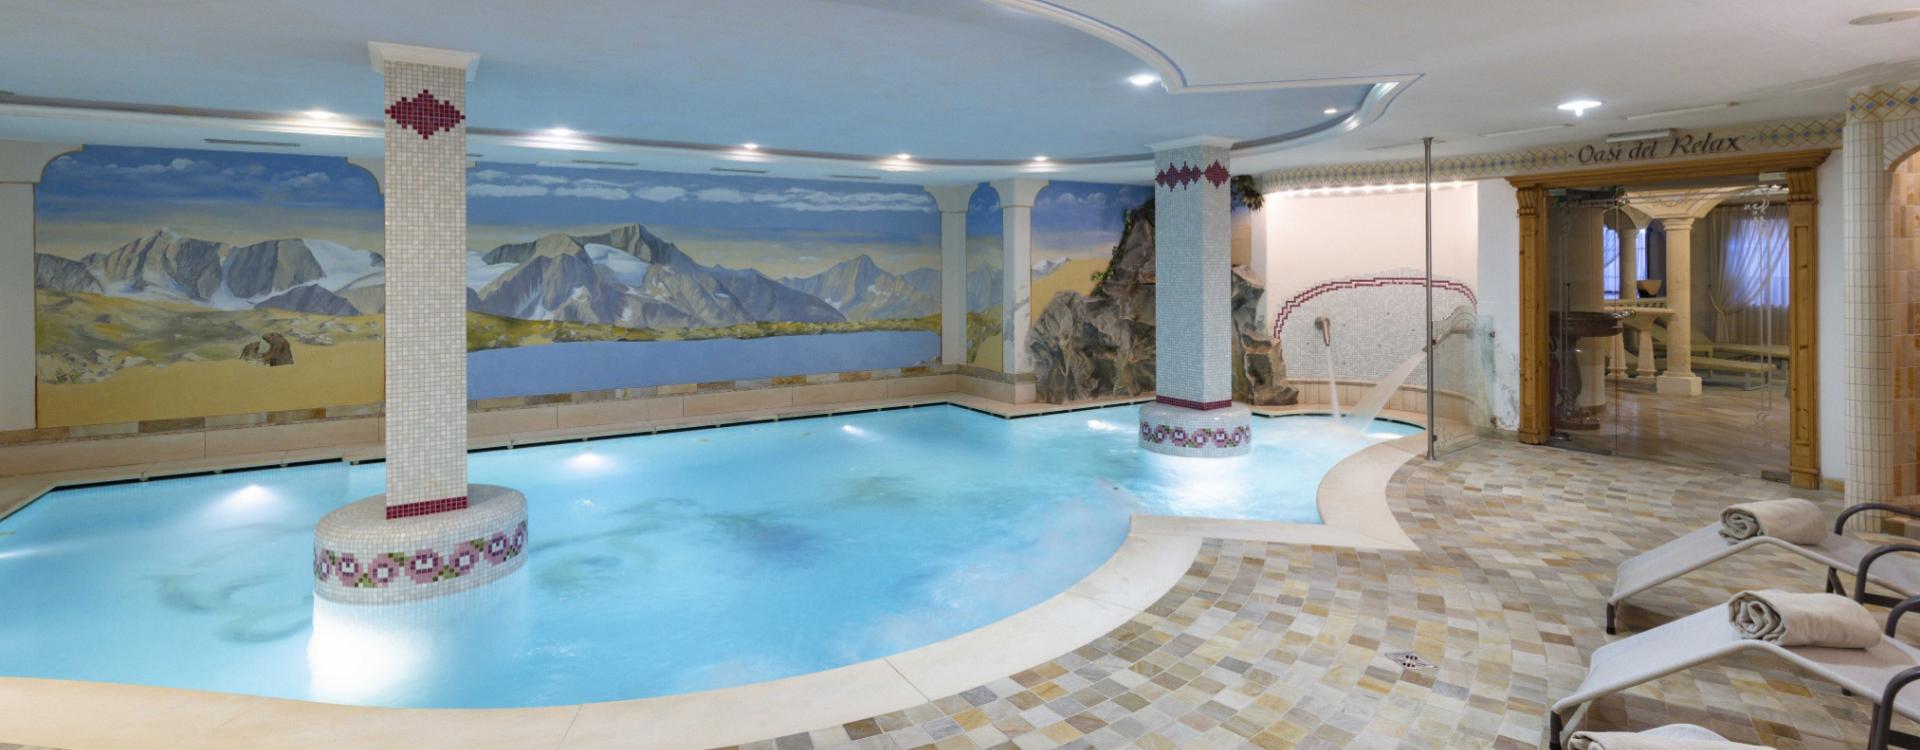 hotelstelviodomina it piscina 013